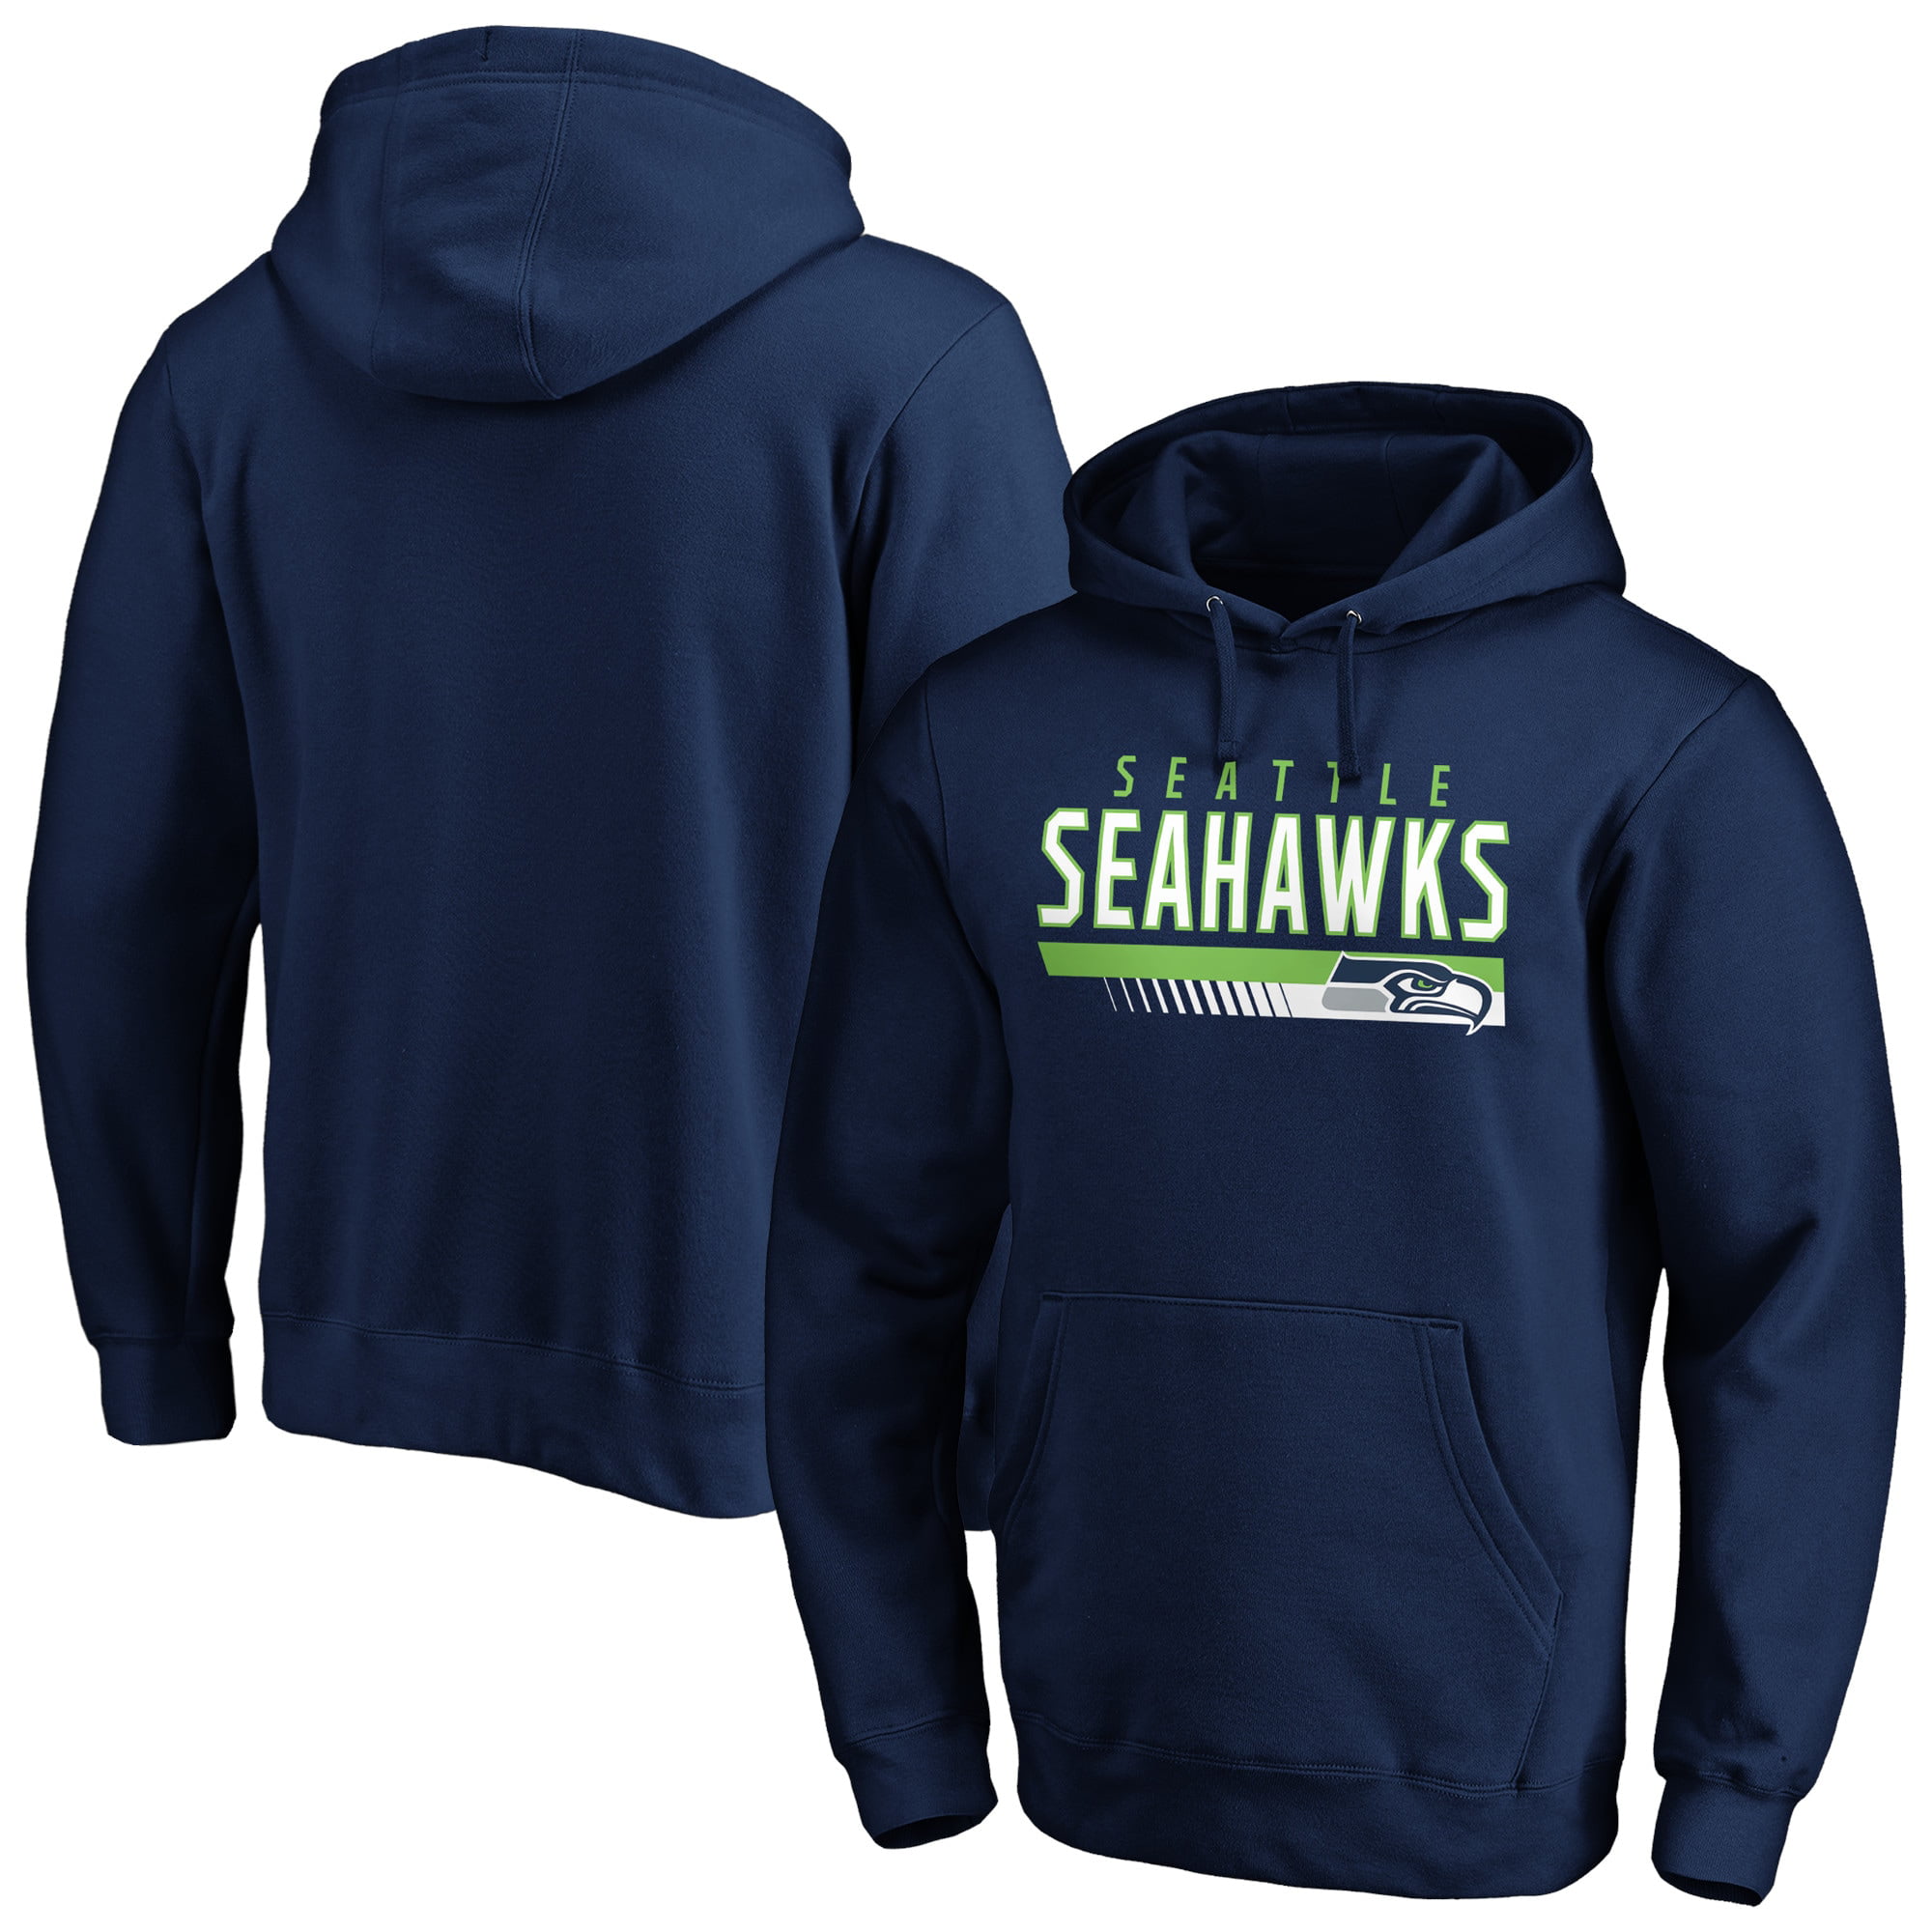 seahawks merchandise for sale